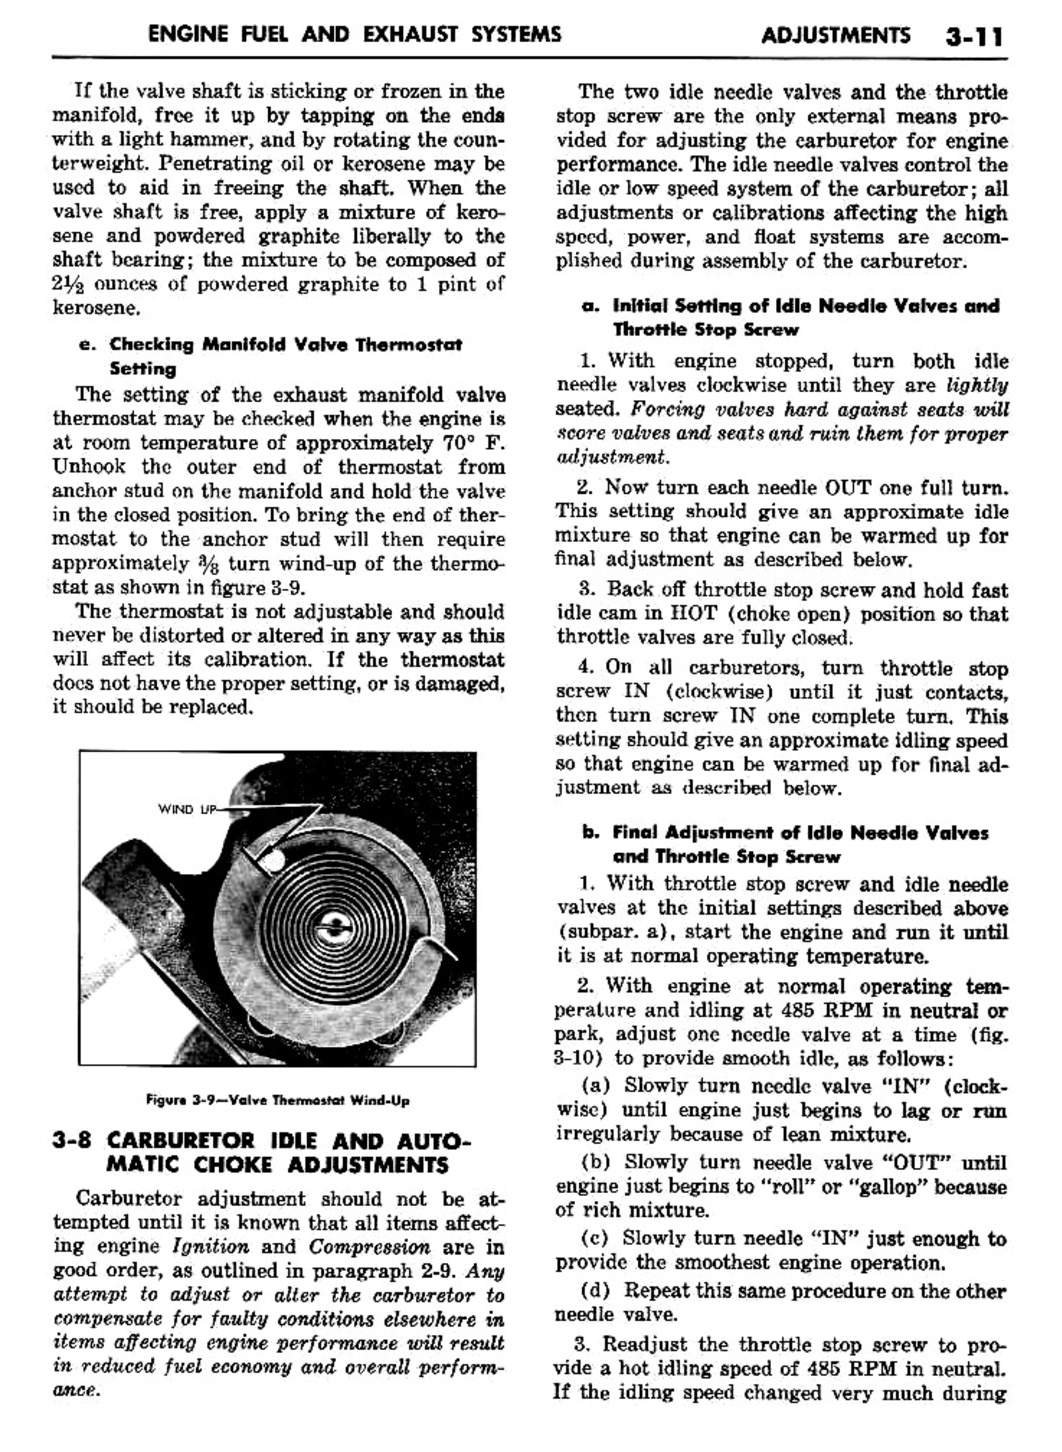 n_04 1957 Buick Shop Manual - Engine Fuel & Exhaust-011-011.jpg